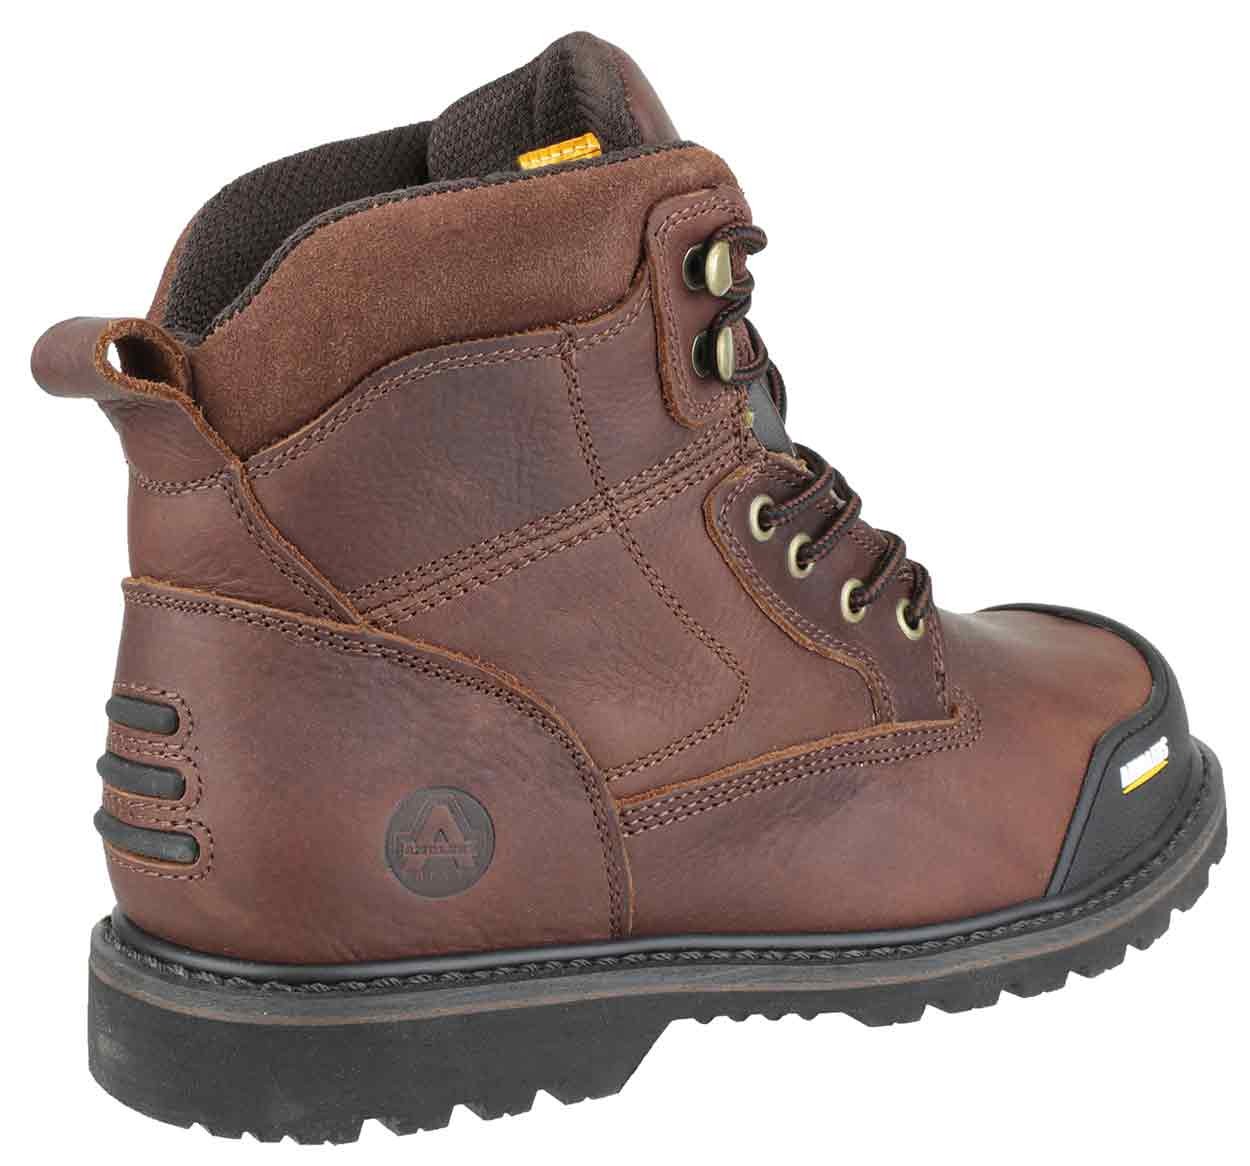 Amblers FS167 Full Grain Goodyear Welted Safety Boot - Standard Safety  Boots - Mens Safety Boots & Shoes - Safety Footwear - Best Workwear